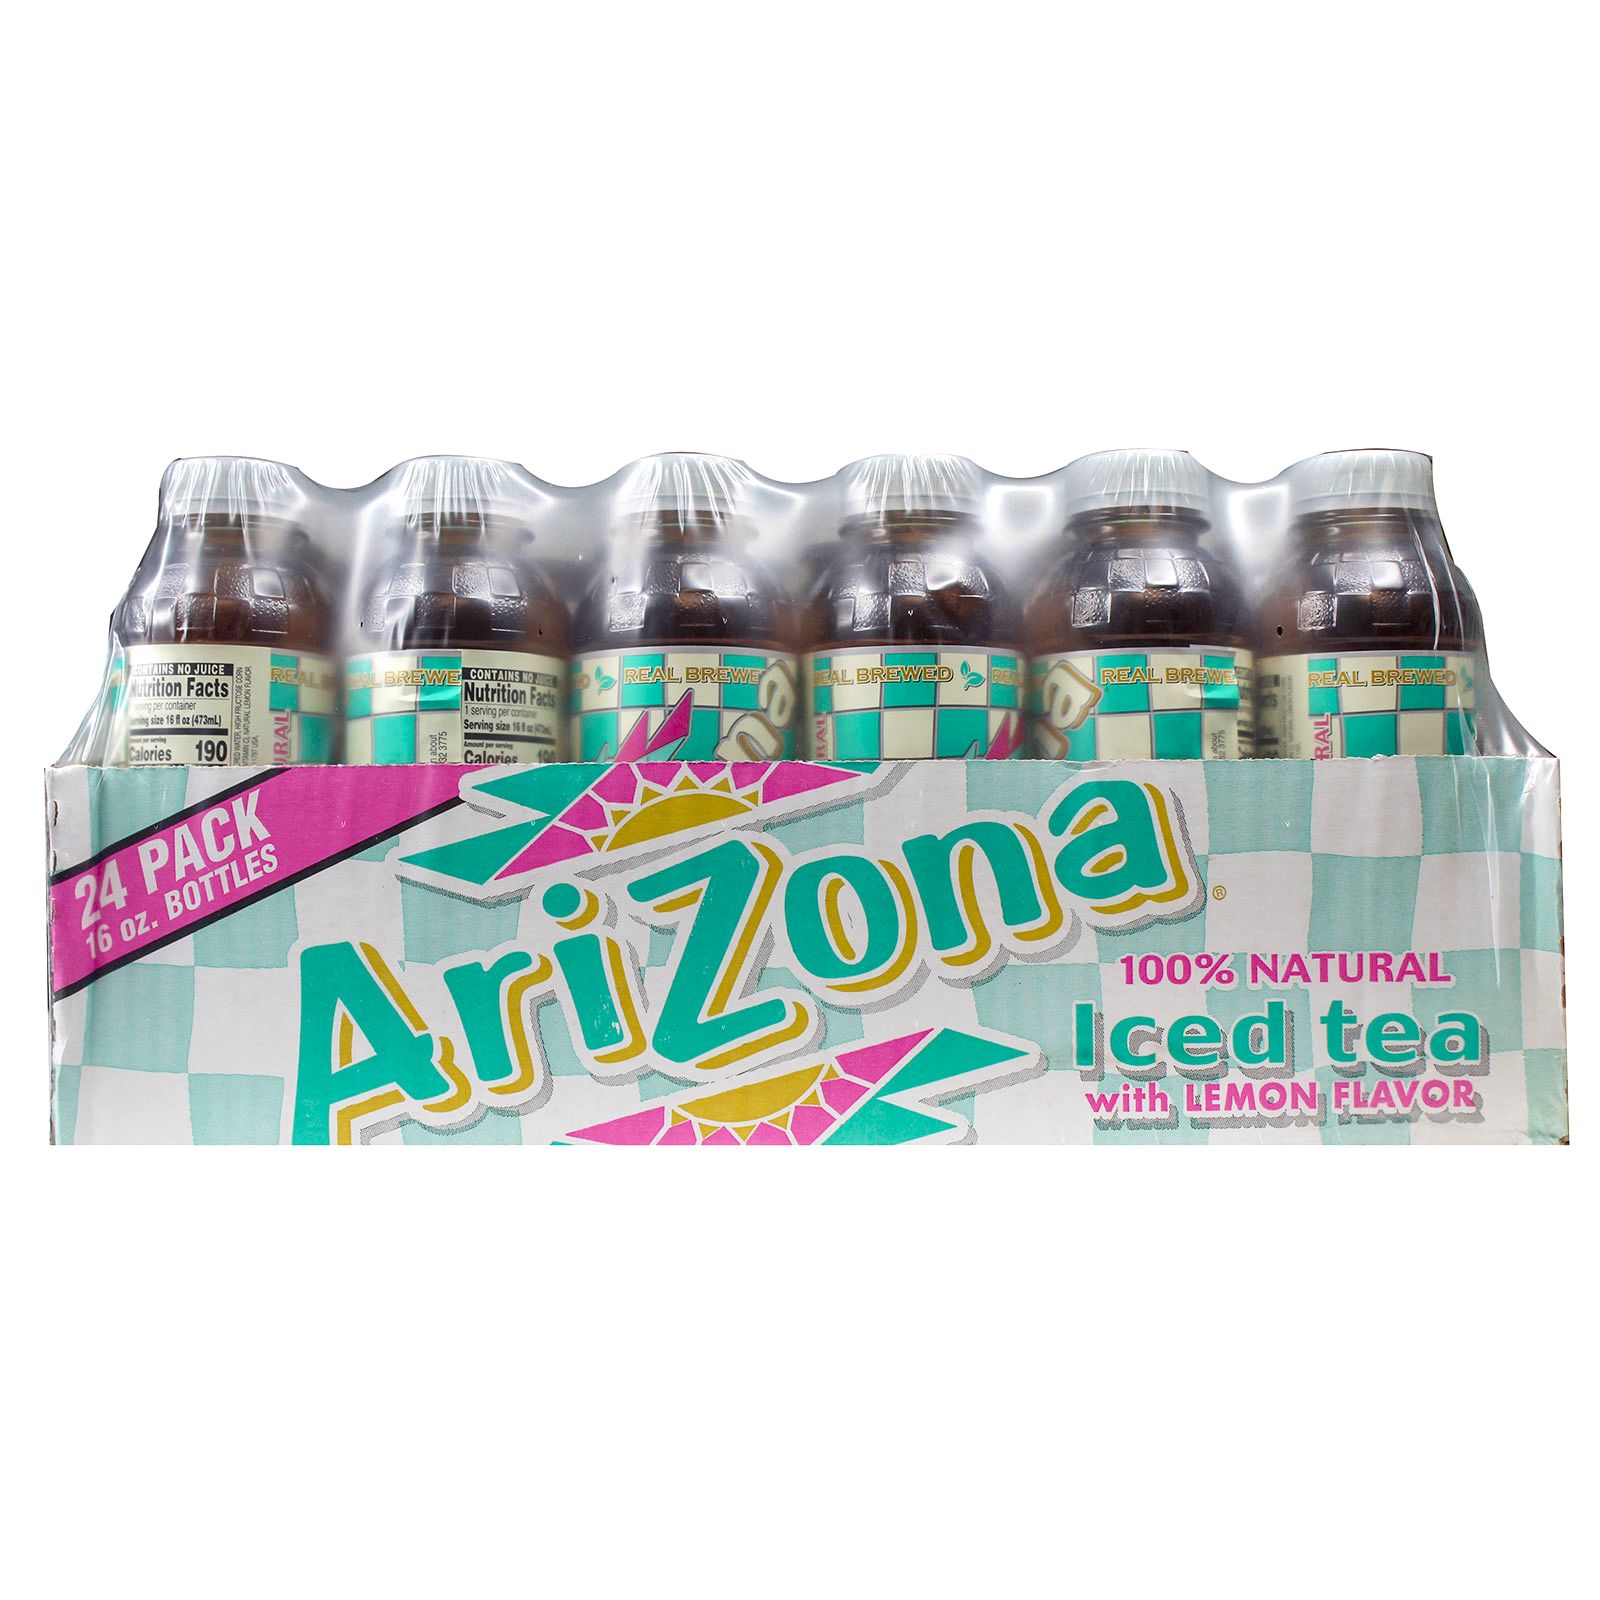 Arizona Ice Tea with Lemon Flavor, 24 pk./16 oz.